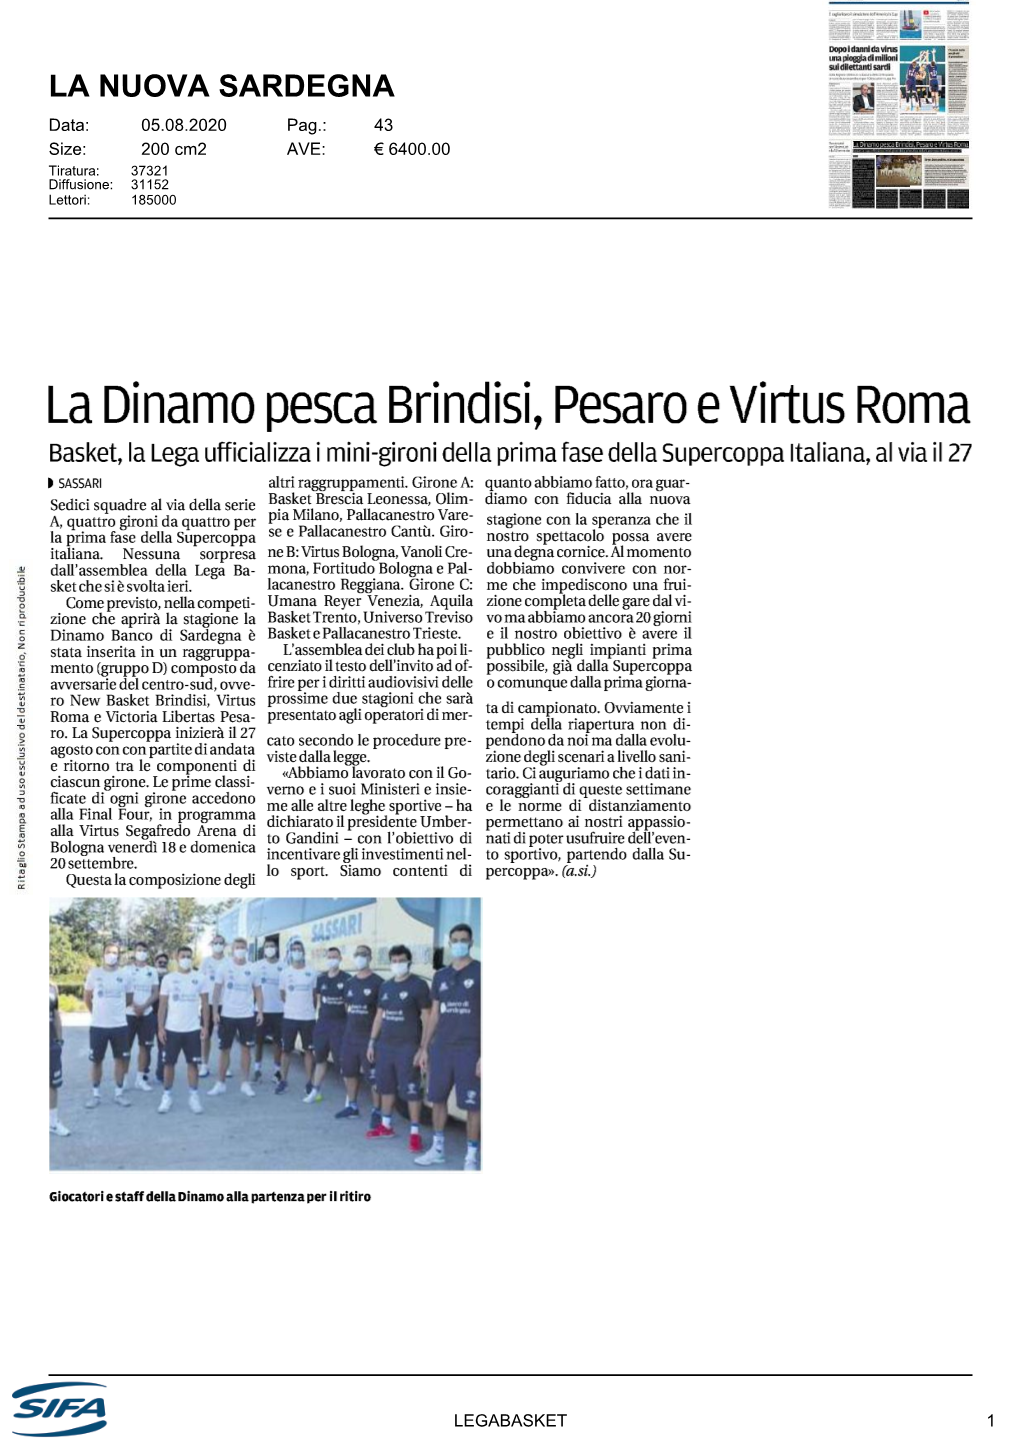 La Dinamo Pesca Brindisi, Pesaro E Virtus Roma